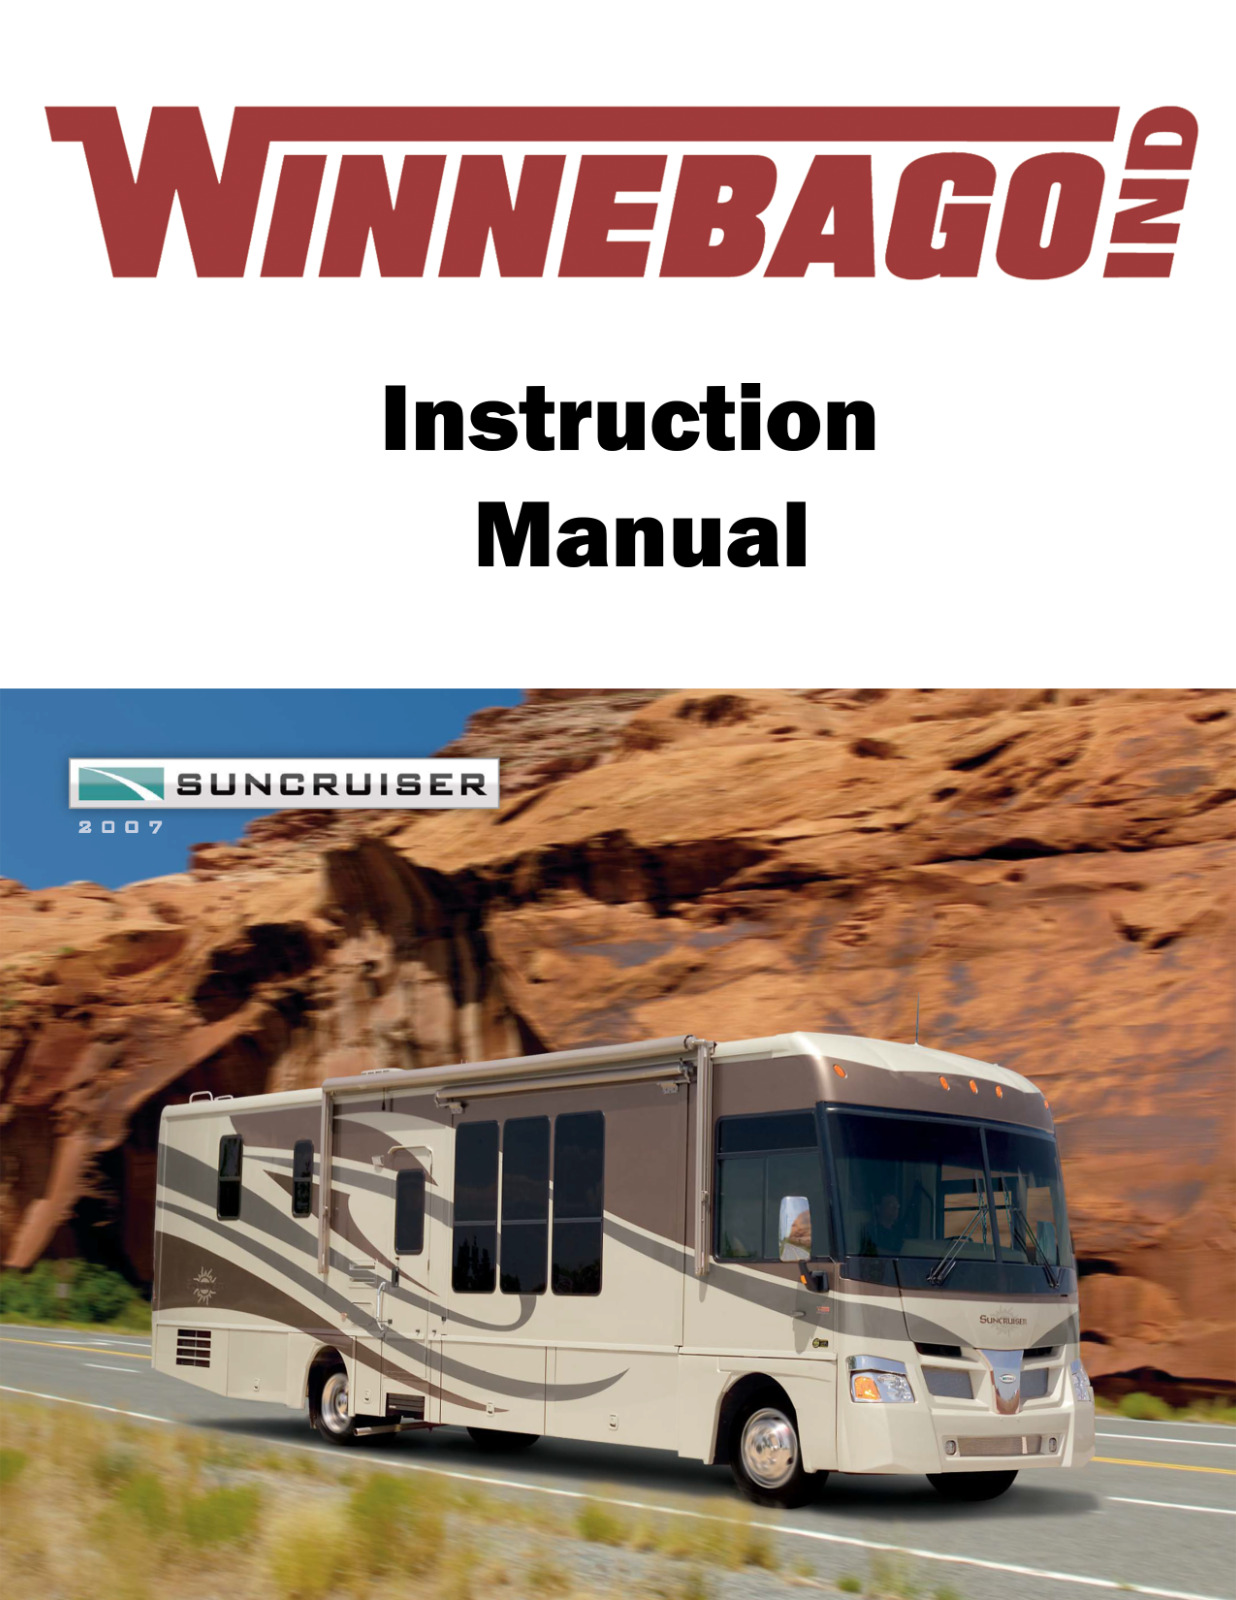 2007 Winnebago Suncruiser Home Owners Operation Manual User Guide Coil Bound